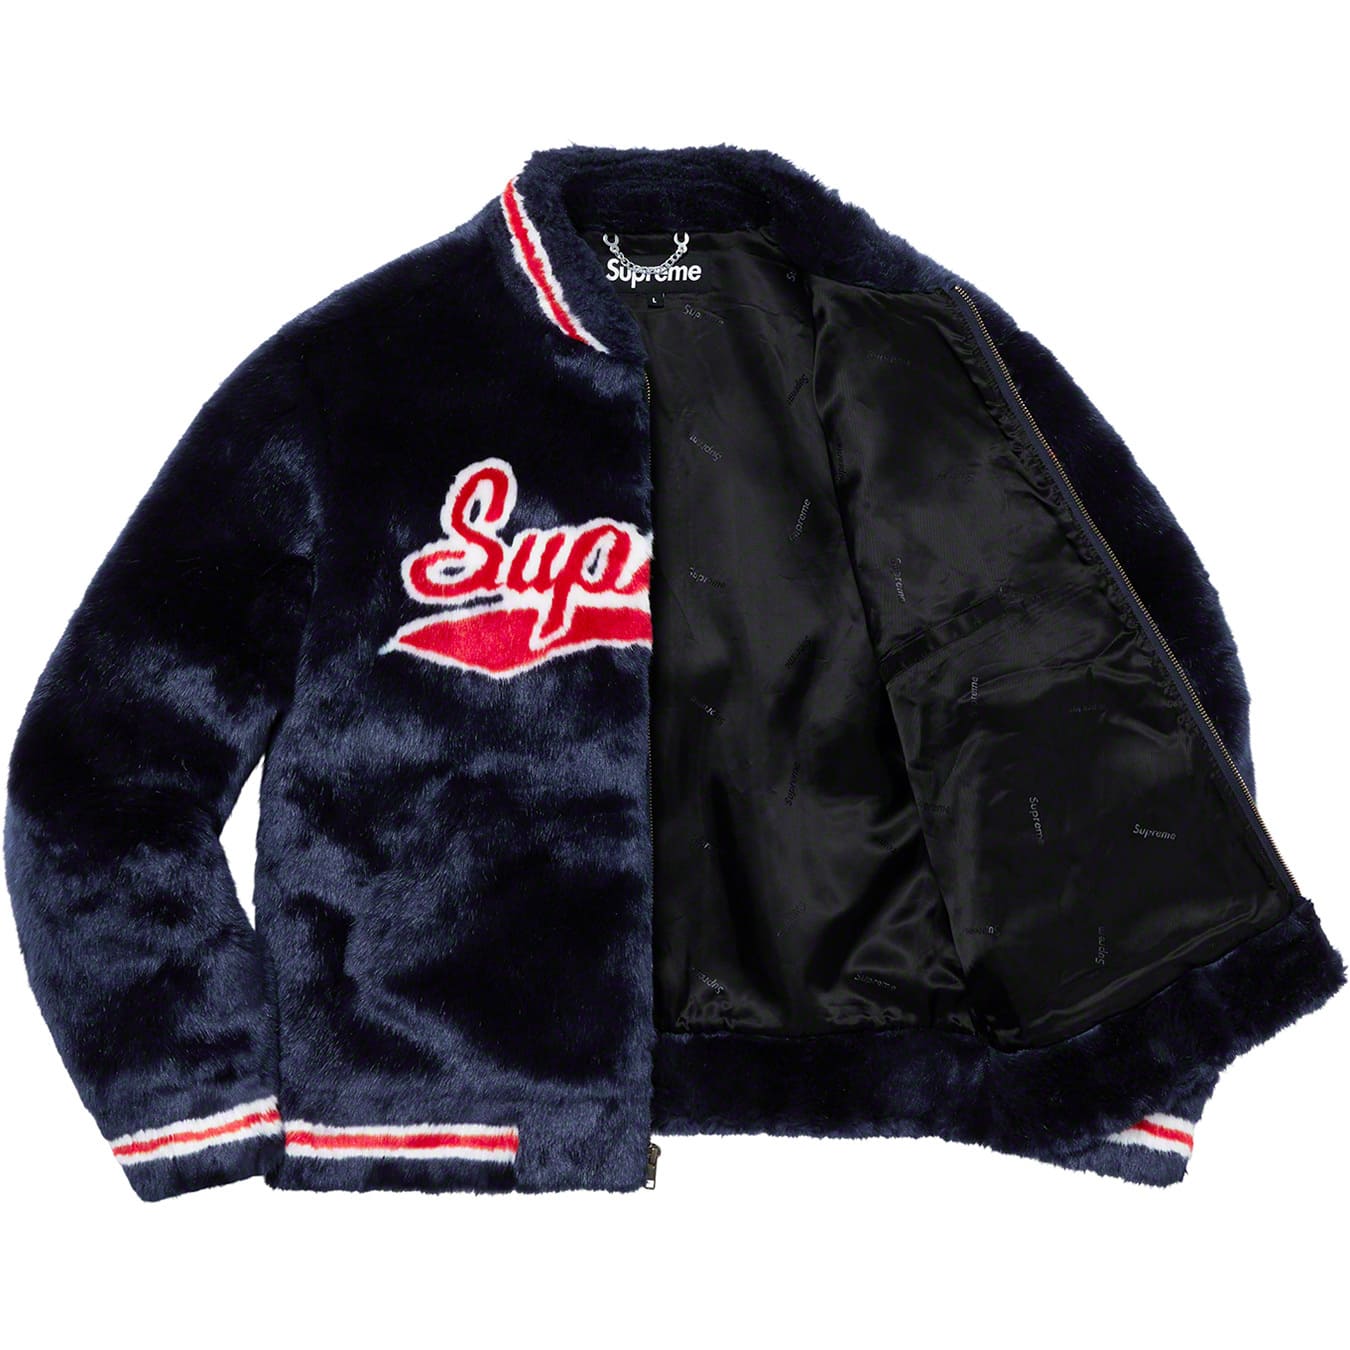 Supreme Faux Fur Varsity Jacket